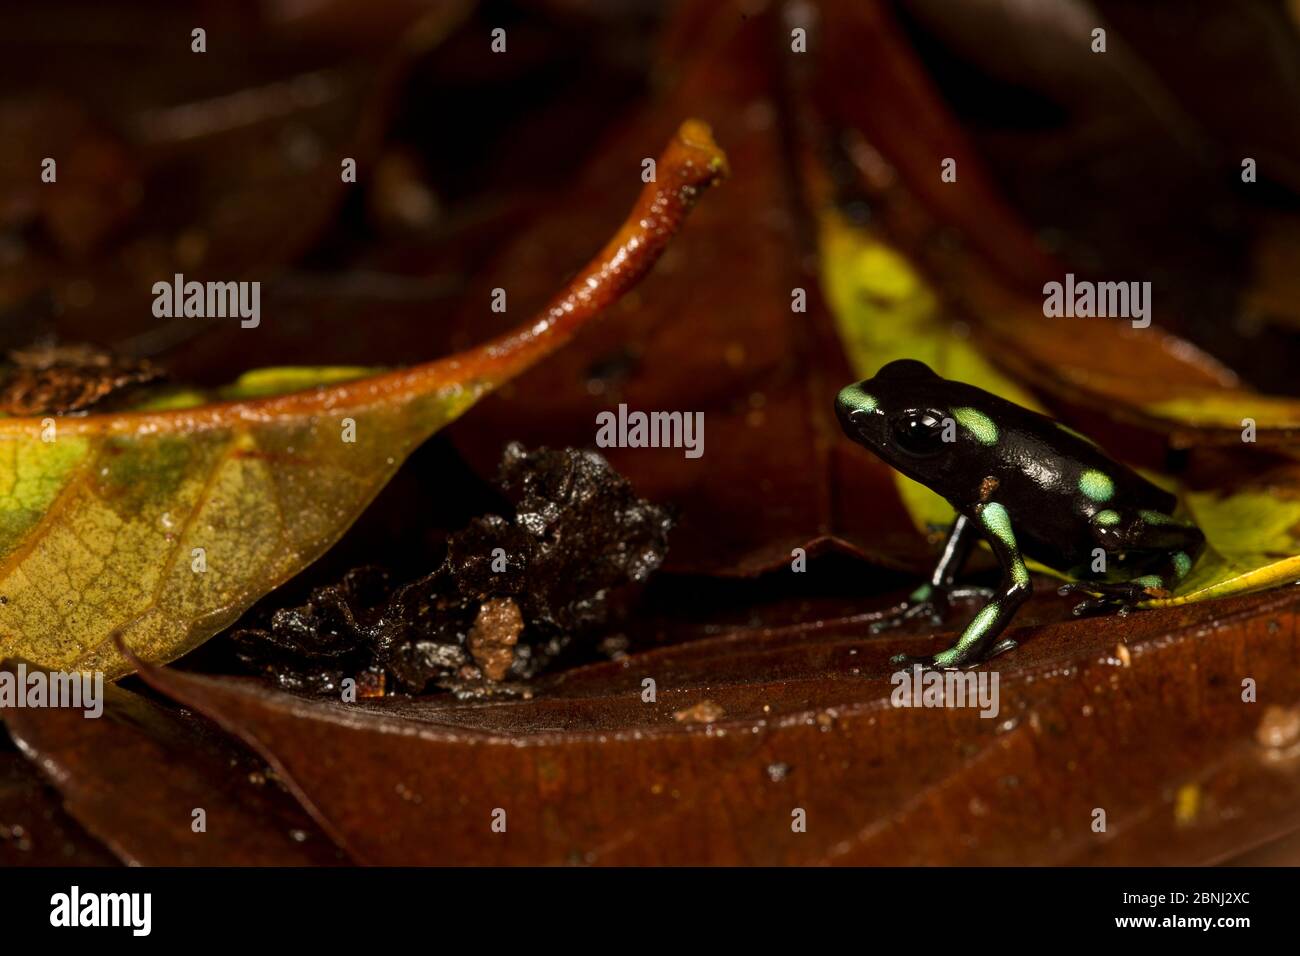 Green and black poison dart frog (Dendrobates auratus) Barro Colorado Island, Gatun Lake, Panama Canal, Panama. Stock Photo